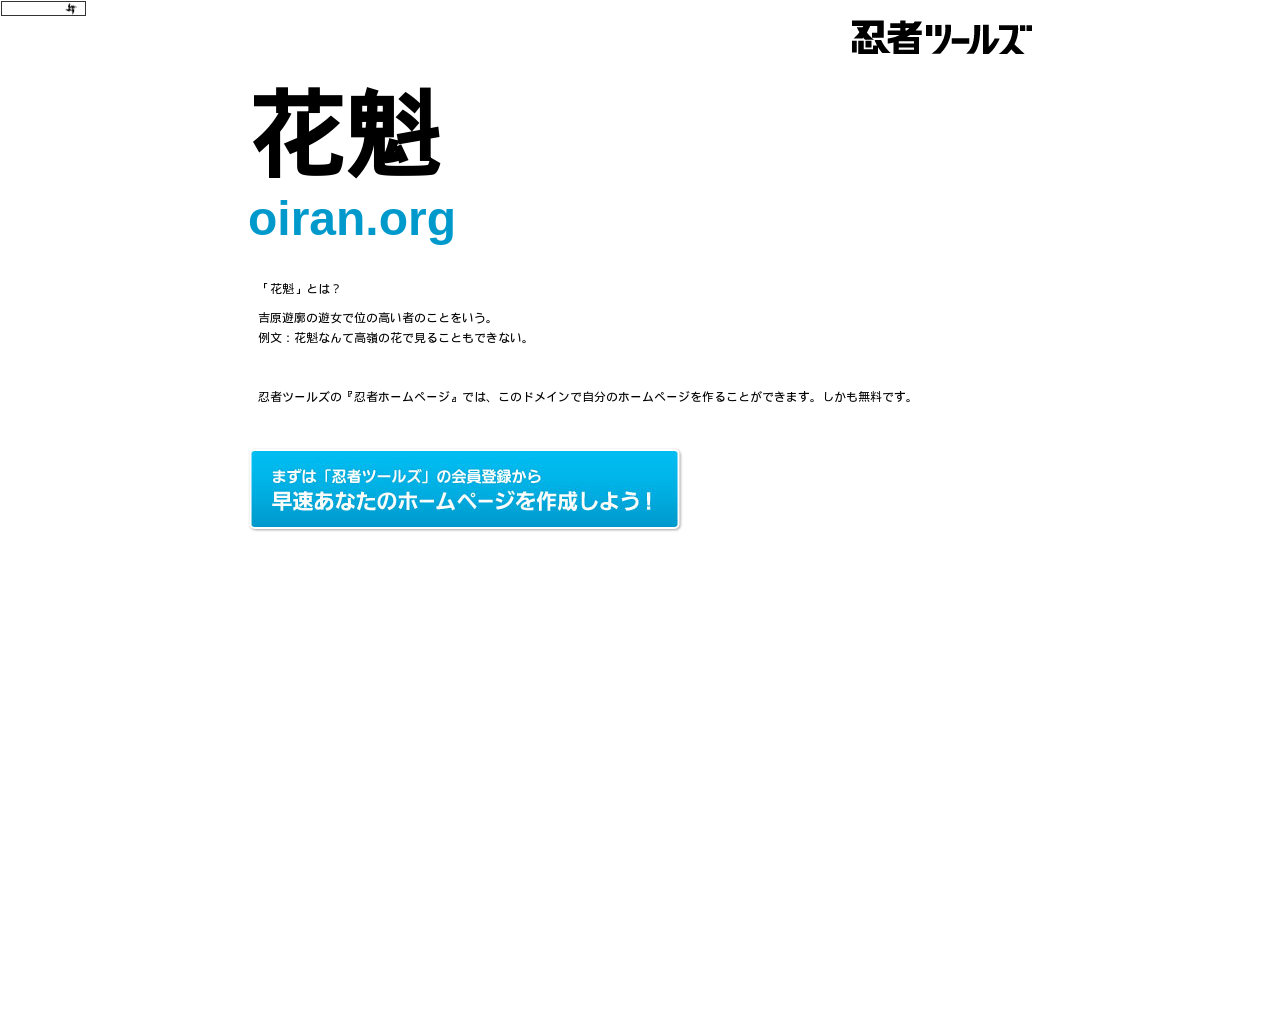 oiran.org